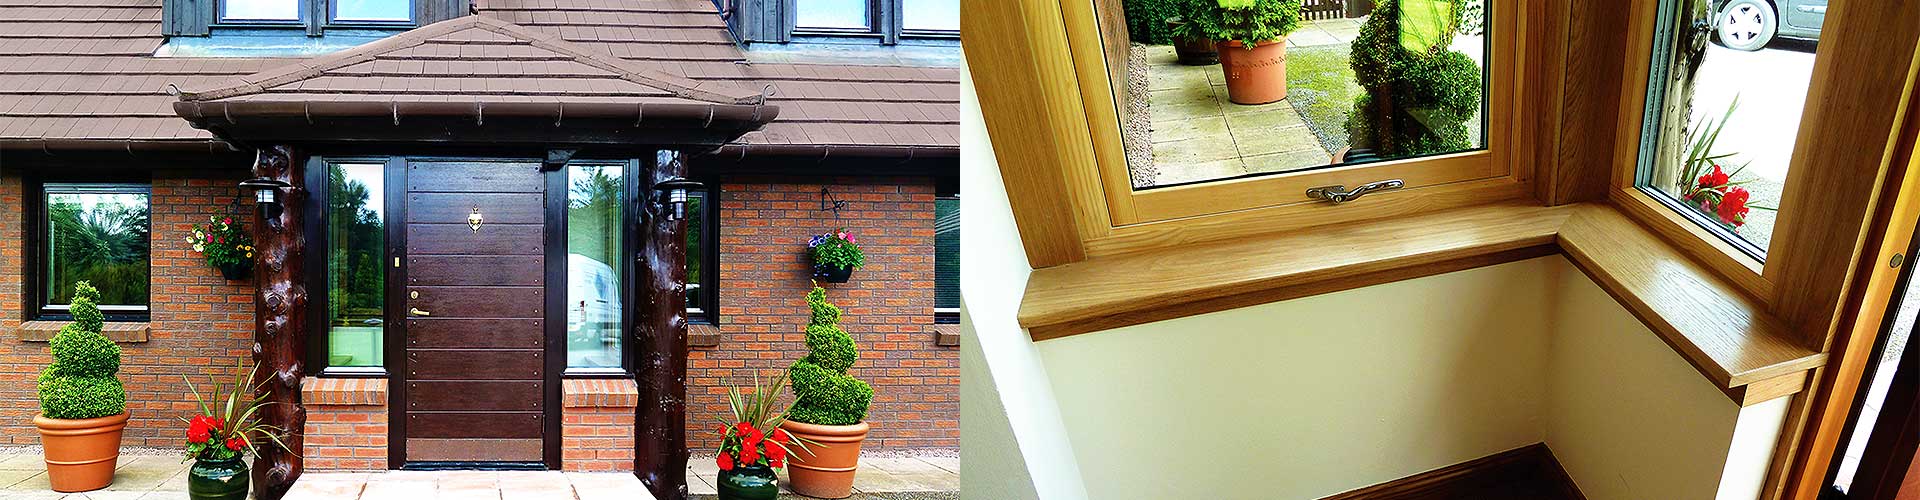 Thistle Home Extensions Aberdeen & Aberdeenshire: Porches